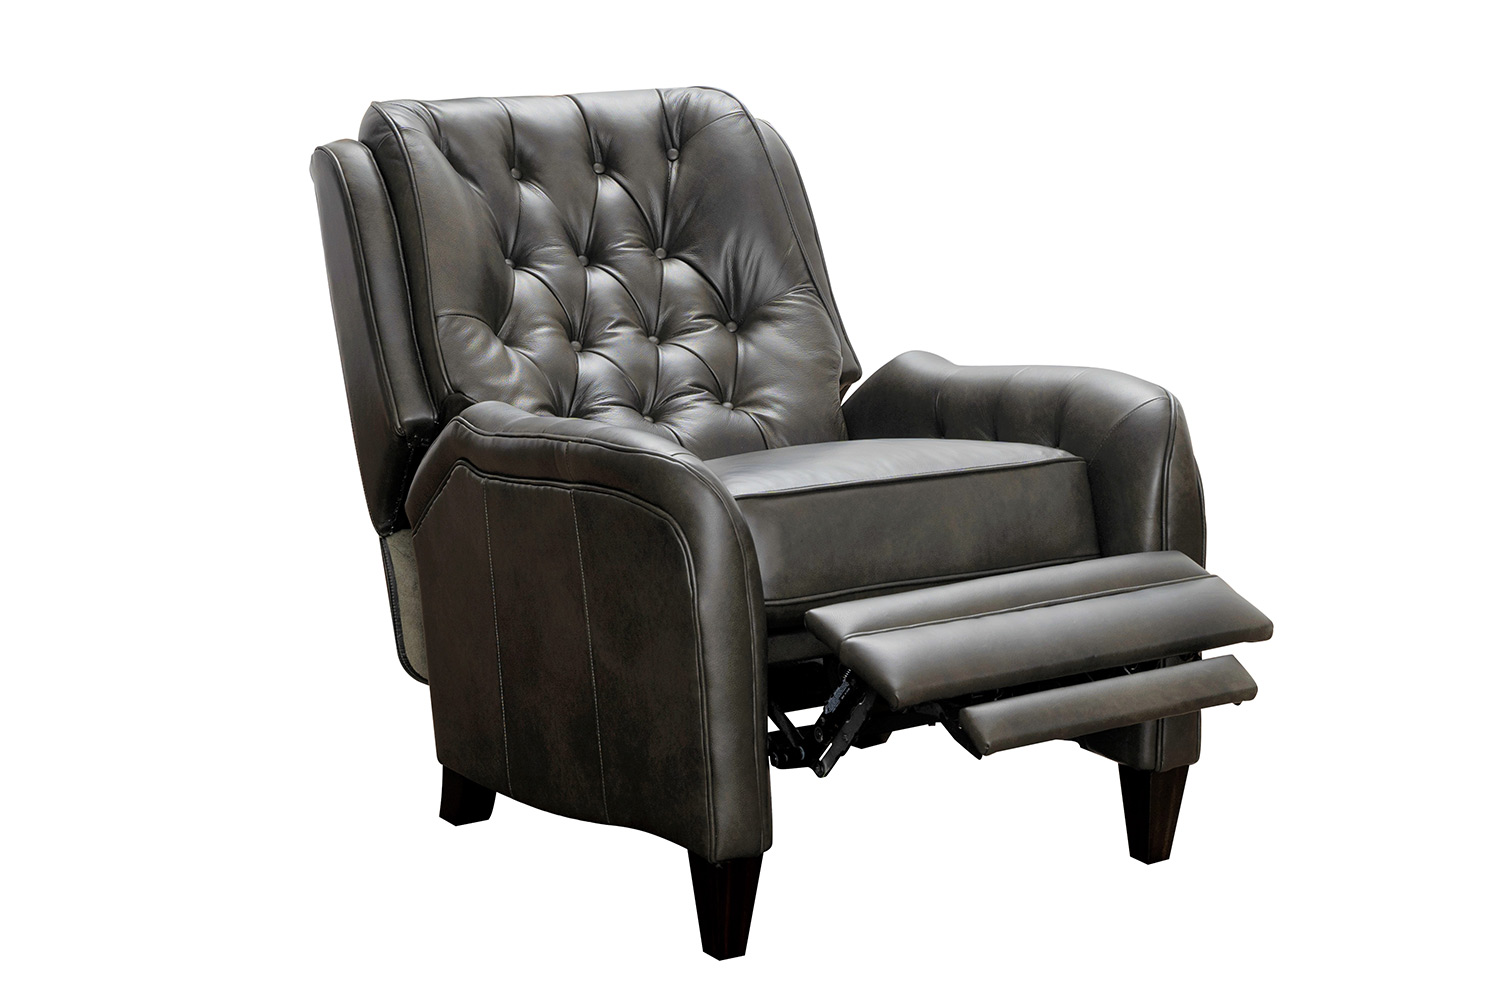 Barcalounger Whittington Recliner Chair - Ashford Graphite/All Leather